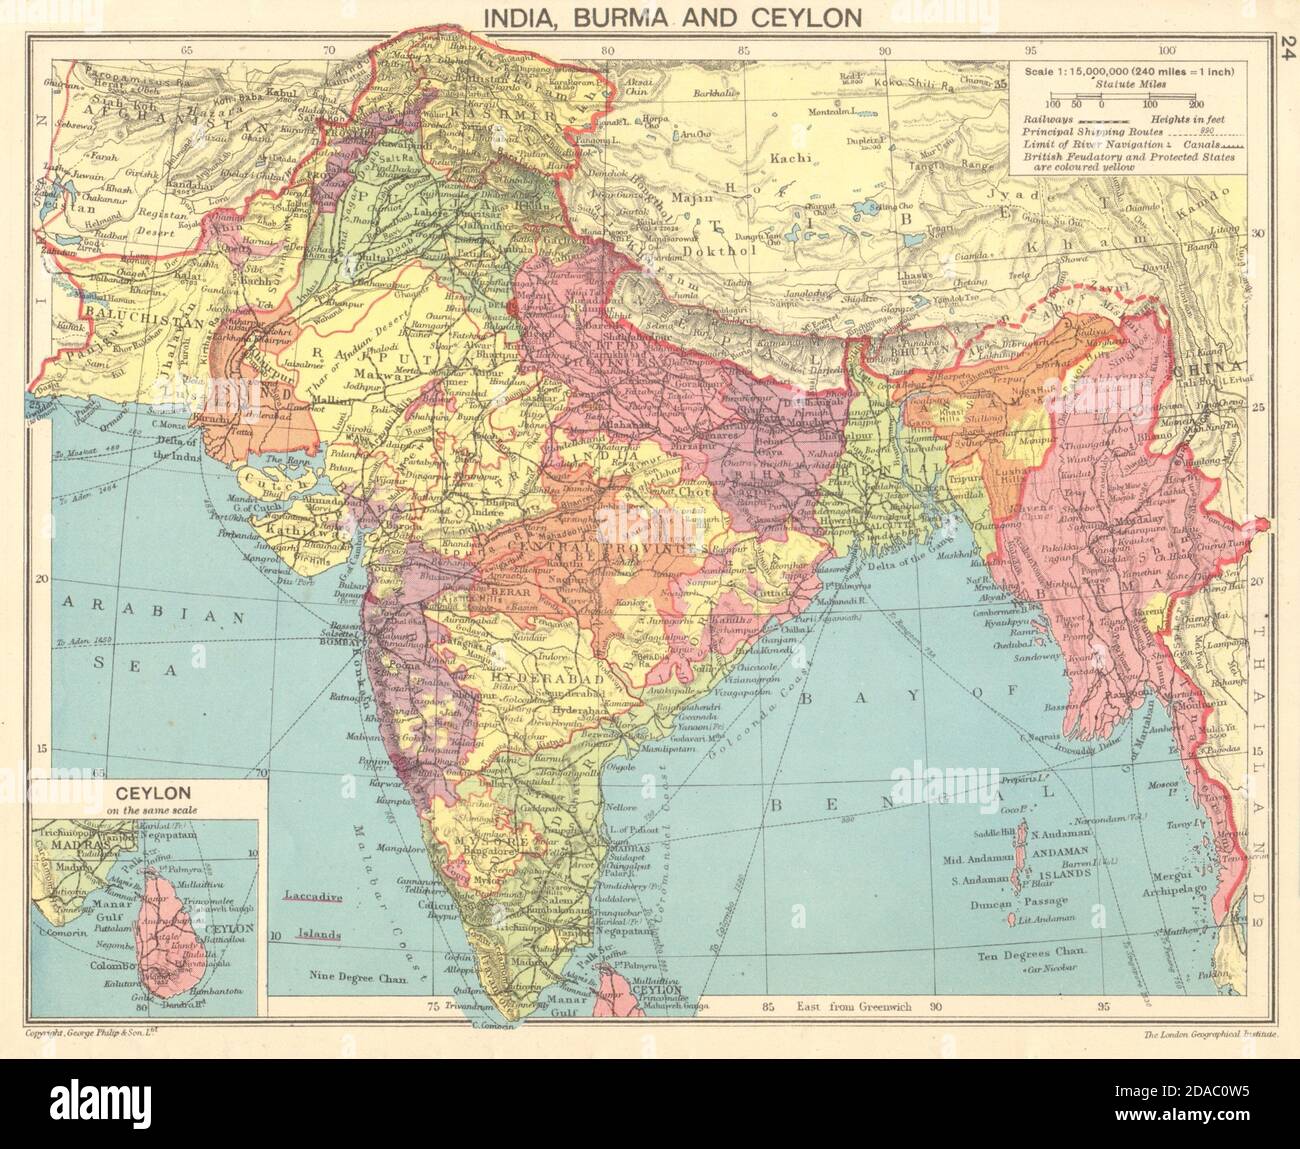 SECOND WORLD WAR. Indian, Burma & Ceylon 1943 old vintage map plan chart Stock Photo